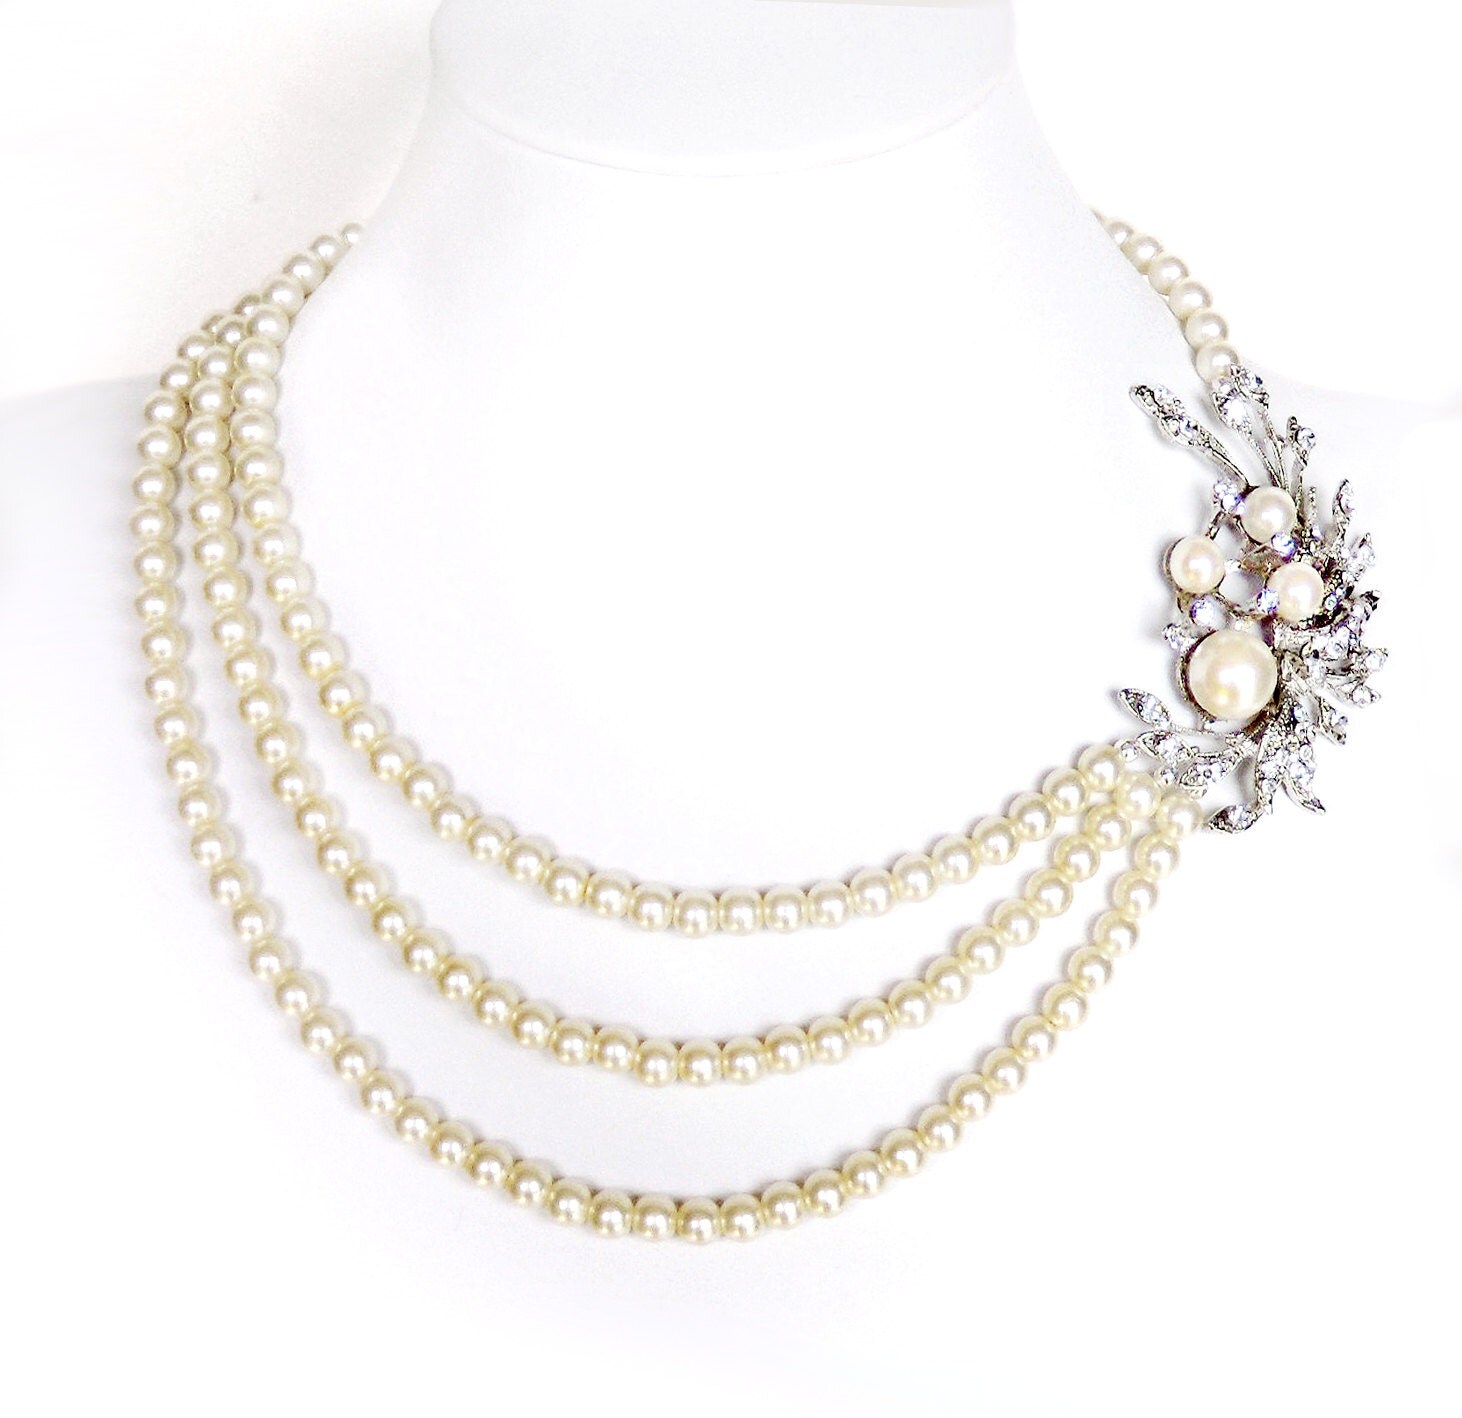 Garden Pearl Necklace Asymmetrical Rhinestone by GetNoticed